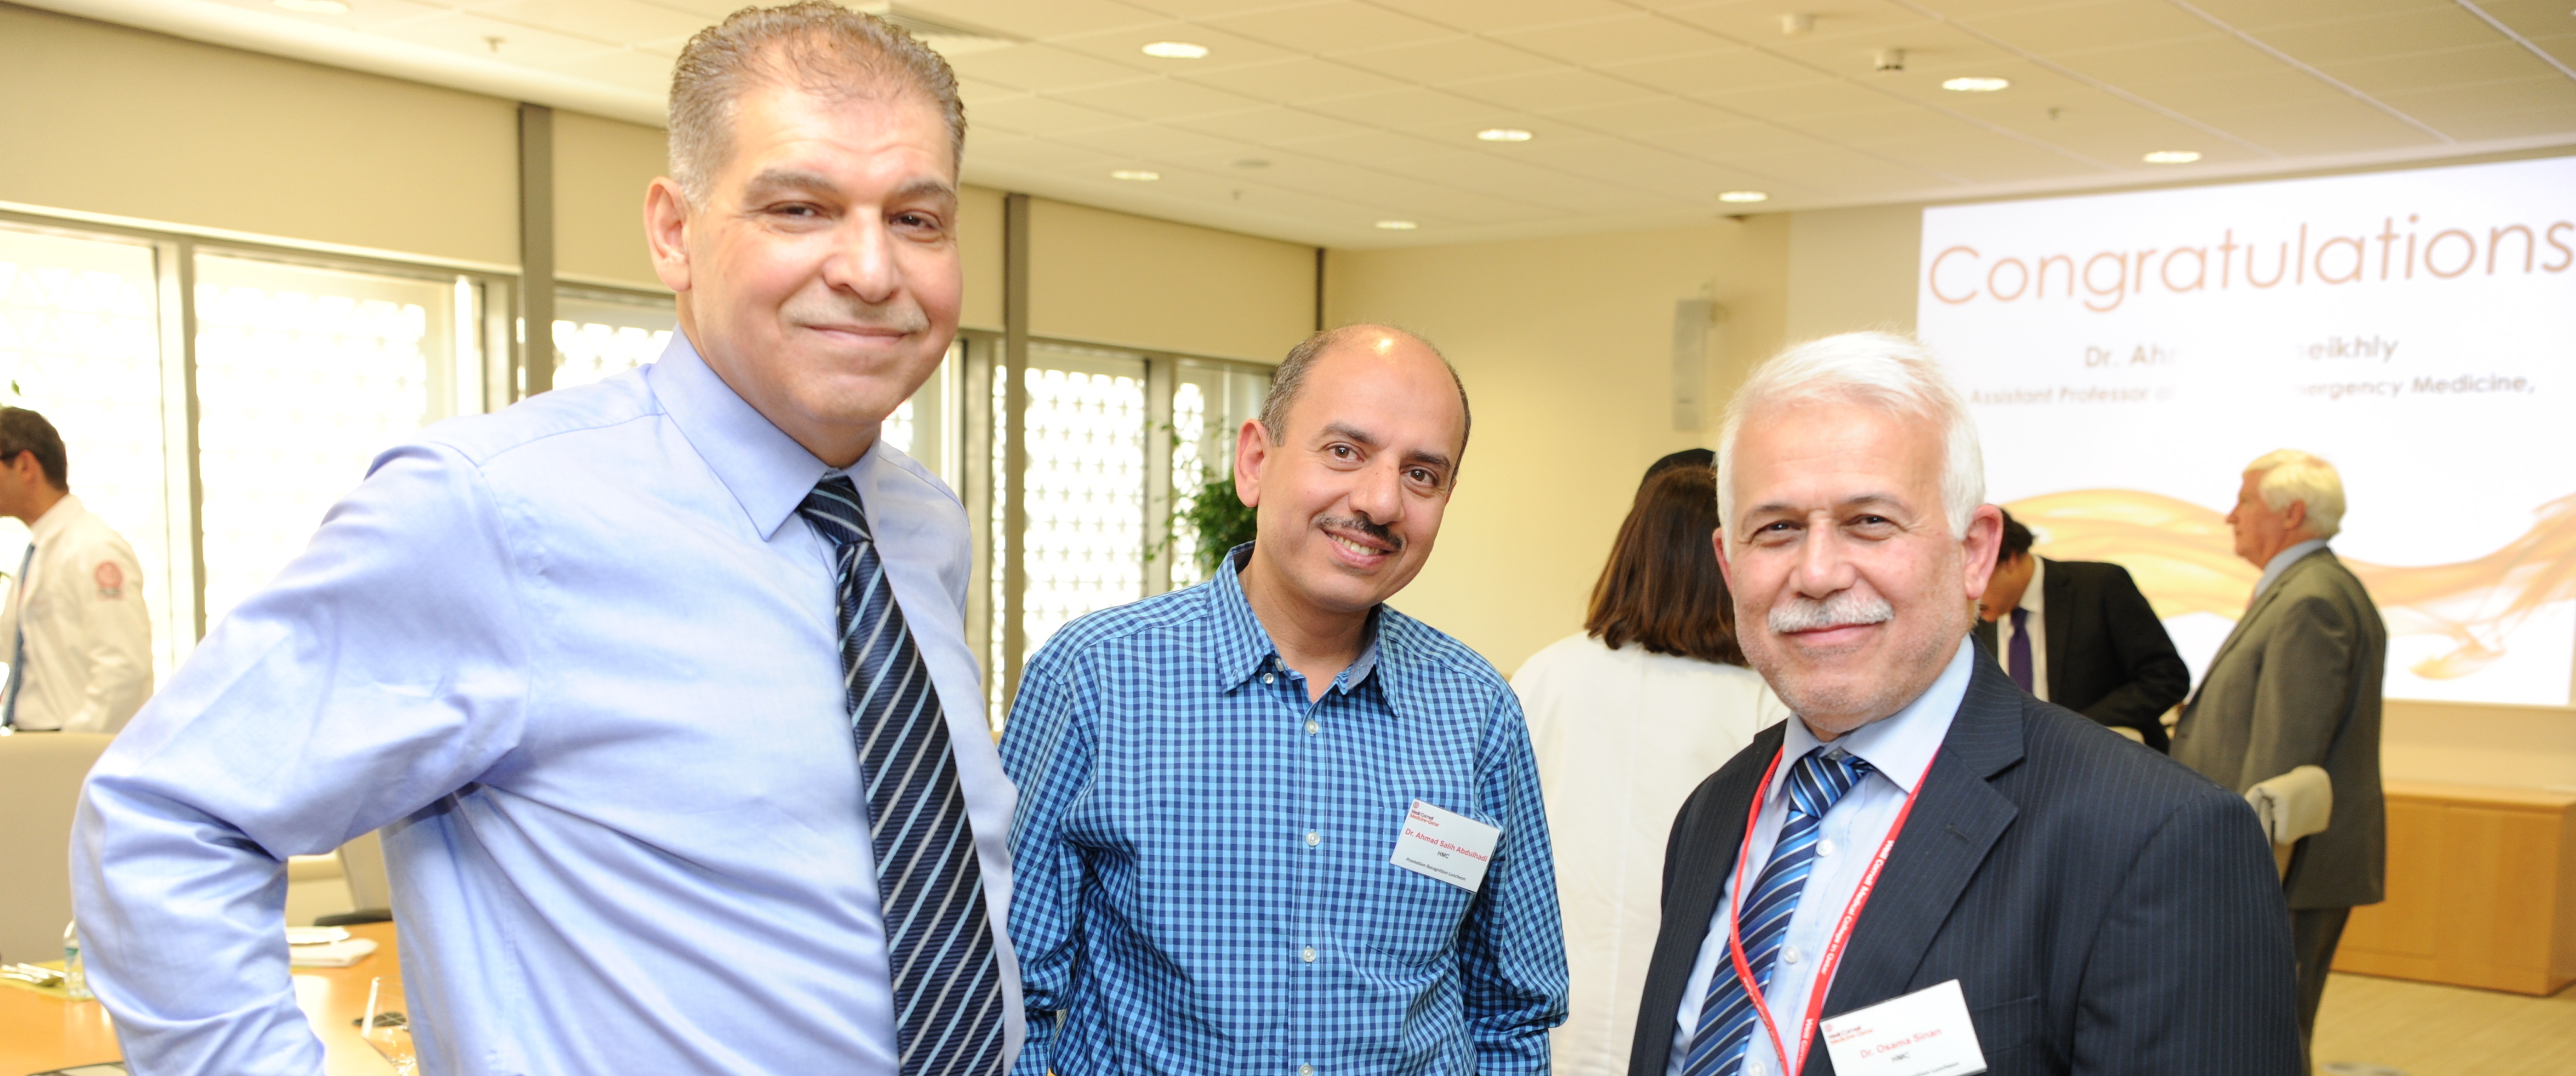 WCM-Q affiliate faculty members Dr. Ahmad Sami Al-Obaidi of Al Wakrah Hospital, Dr. Ahmad Salih Abdulhadi of HMC Heart Hospital, and Dr. Osama Sinan of Al Khor Hospital at the Promotion Recognition Luncheon.